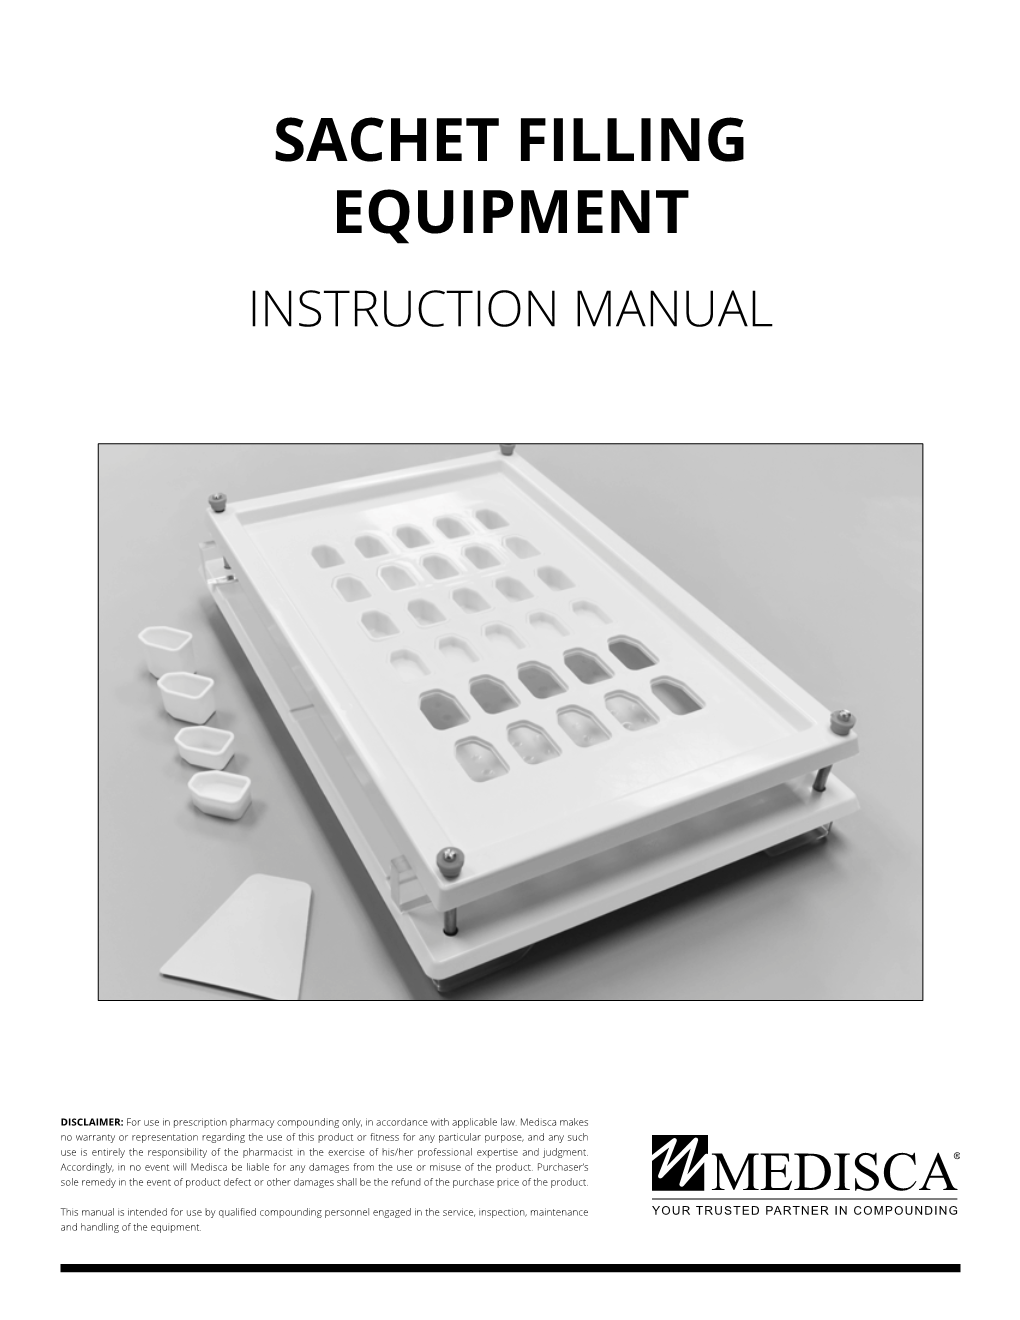 Sachet Filling Equipment Instruction Manual